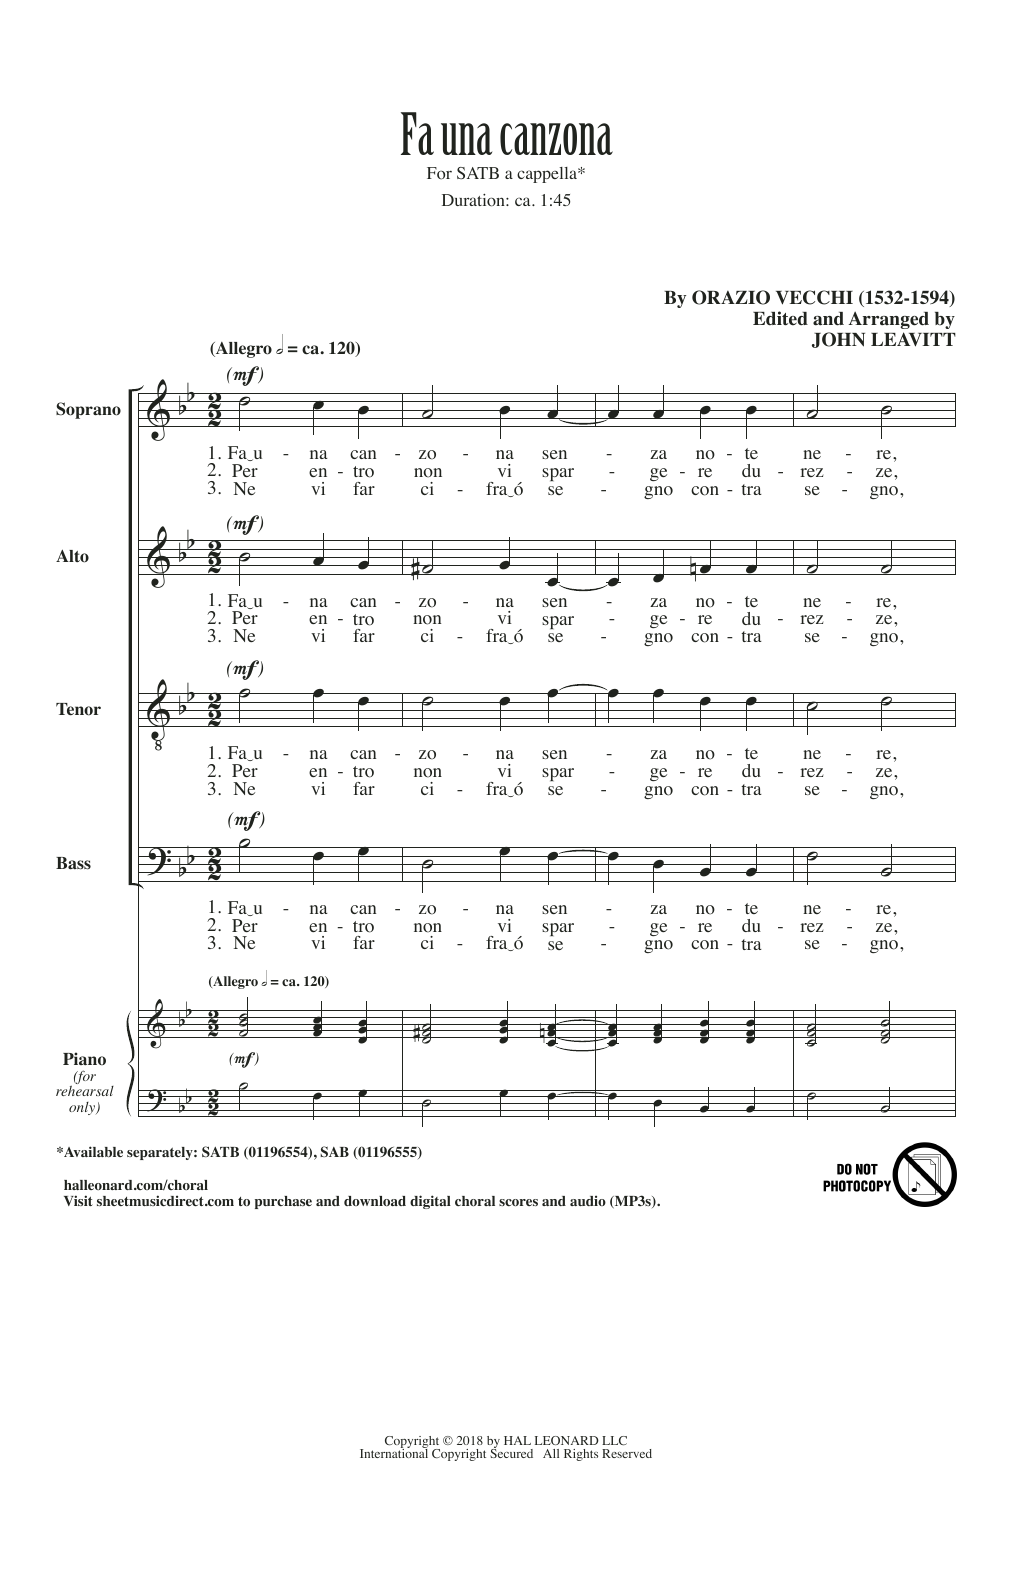 Orazio Vecchi Fa Una Canzona (arr. John Leavitt) Sheet Music Notes & Chords for SAB Choir - Download or Print PDF